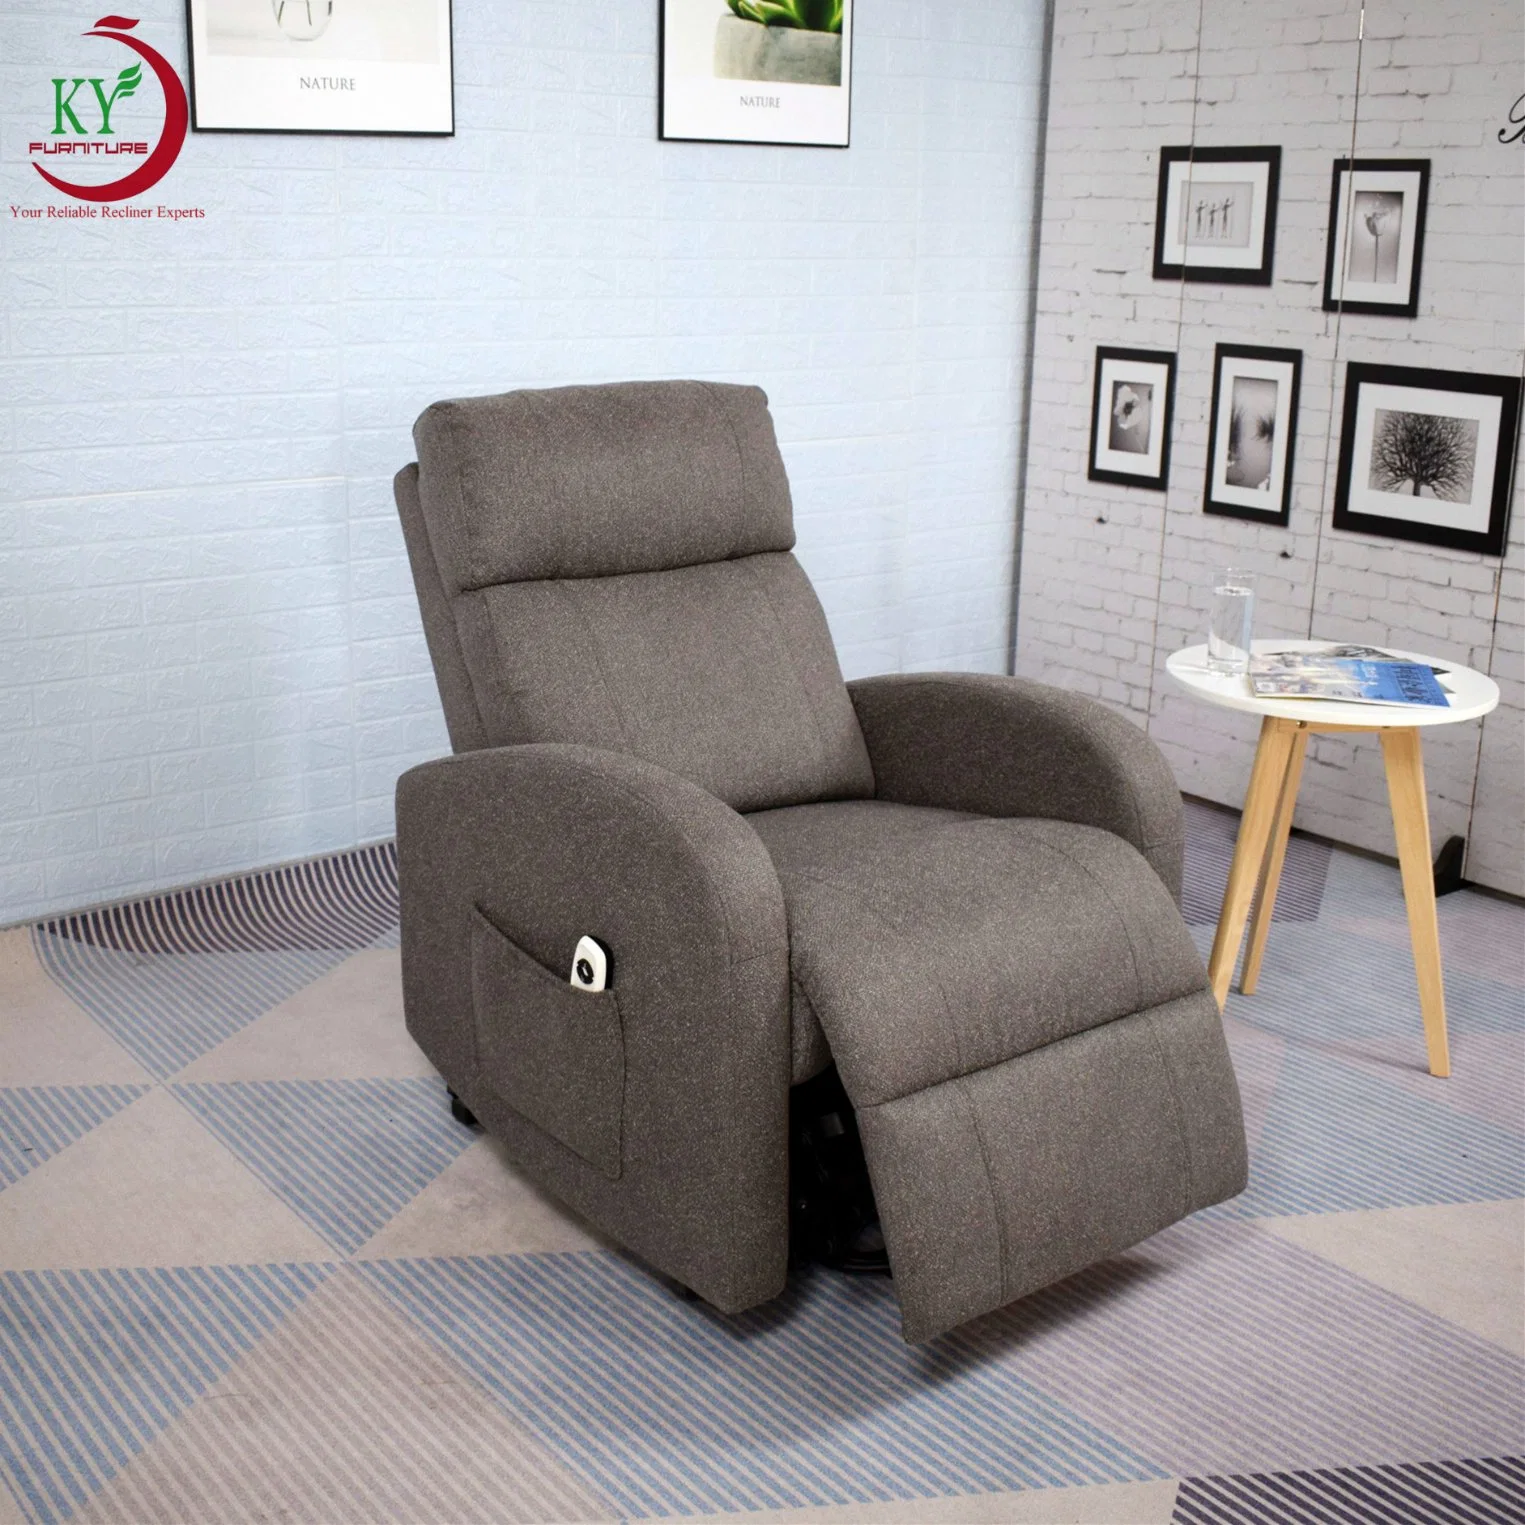 Geeksofa Modern Design Fabric Zero Gravity Power Lift Chair with Dual Okin Motor